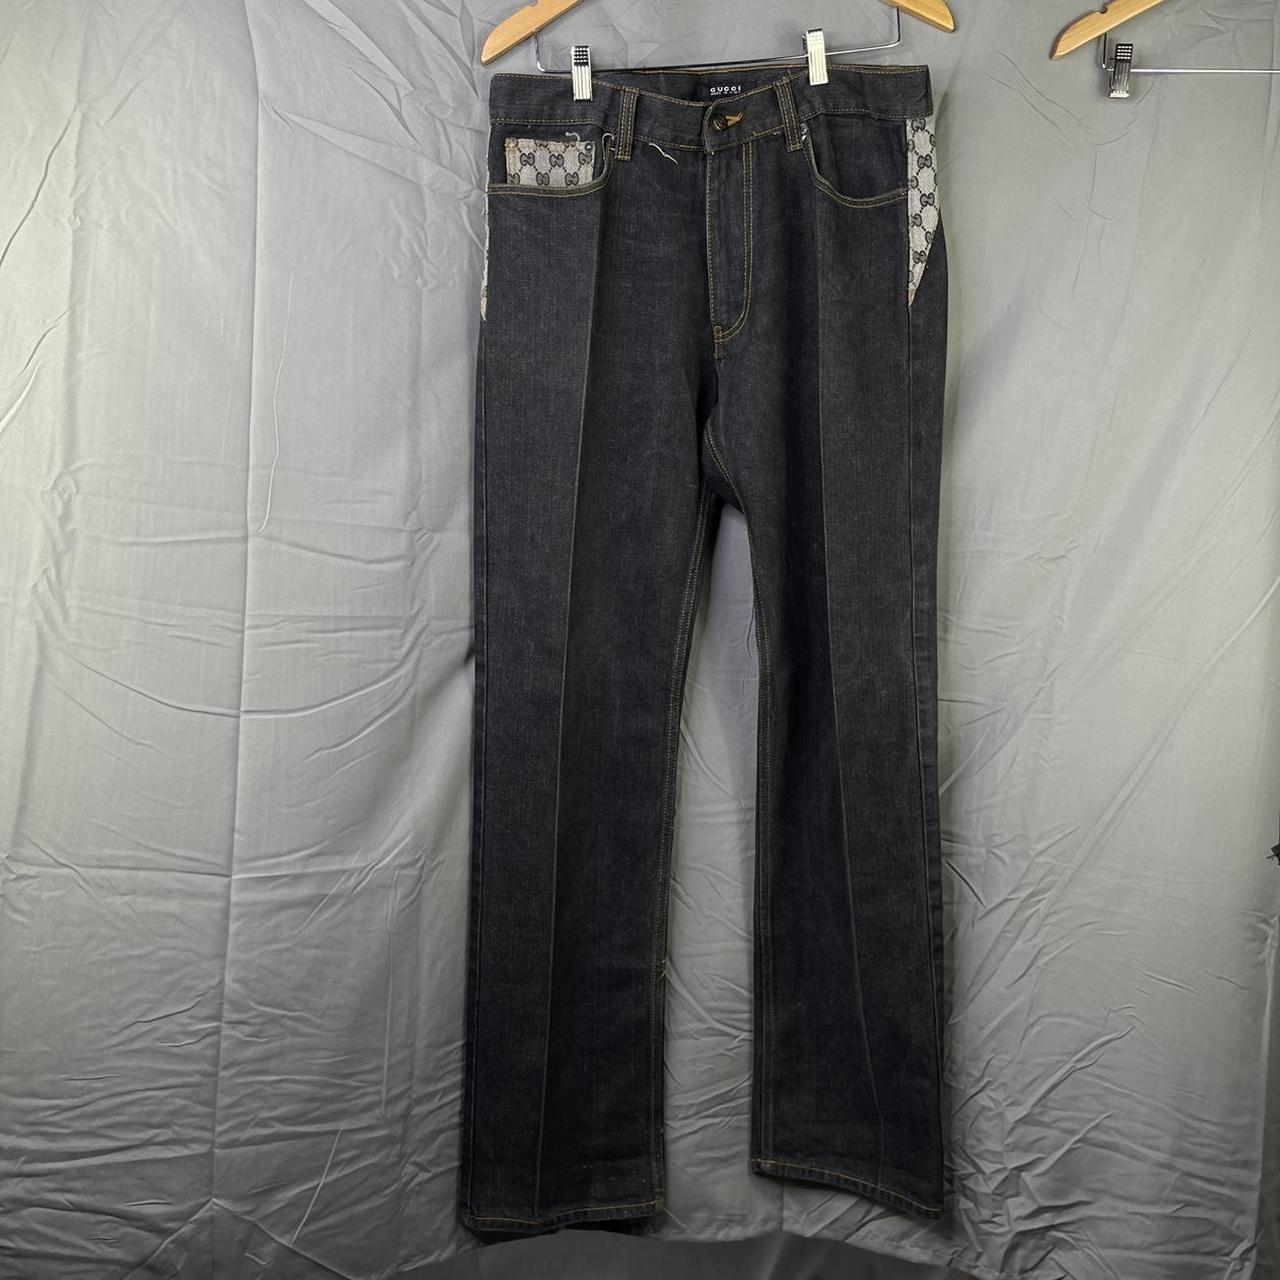 Vintage Early 2000s GUCCI Monogram Denim Jeans... - Depop